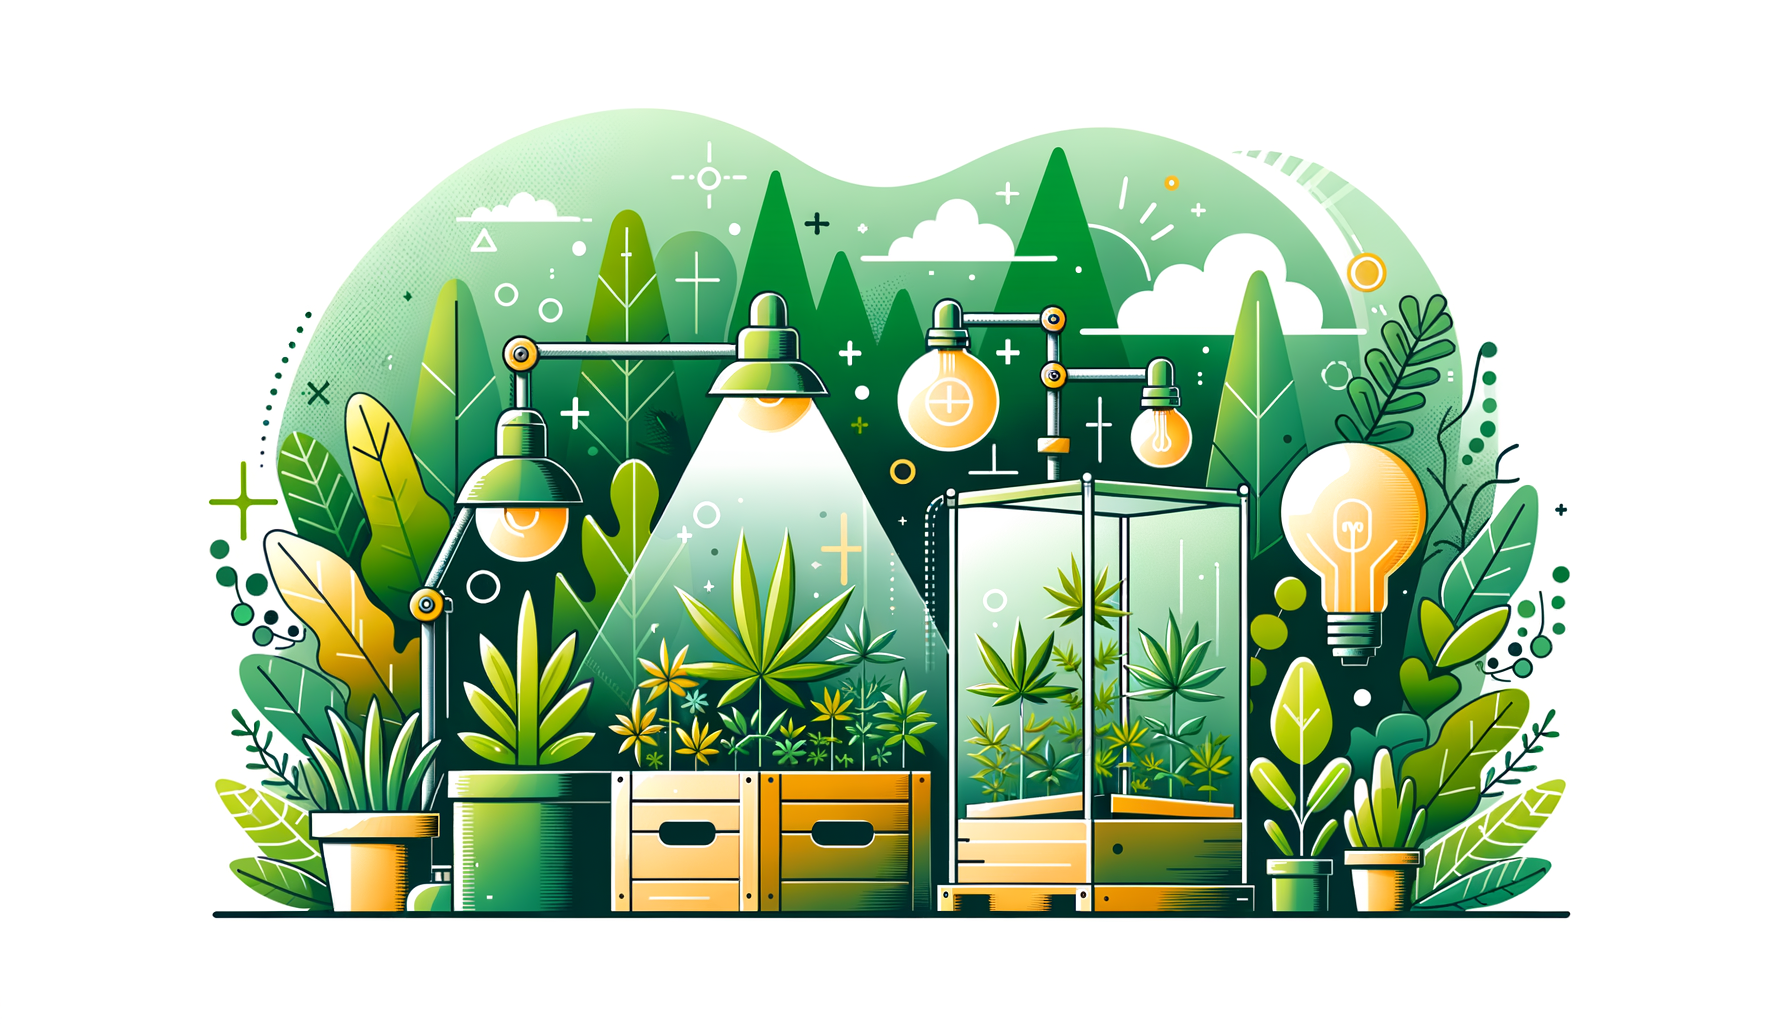 Die ultimative Anleitung zum Cannabisanbau: Wähle das perfekte Grow-Equipment von Grow Box bis LED Lampe